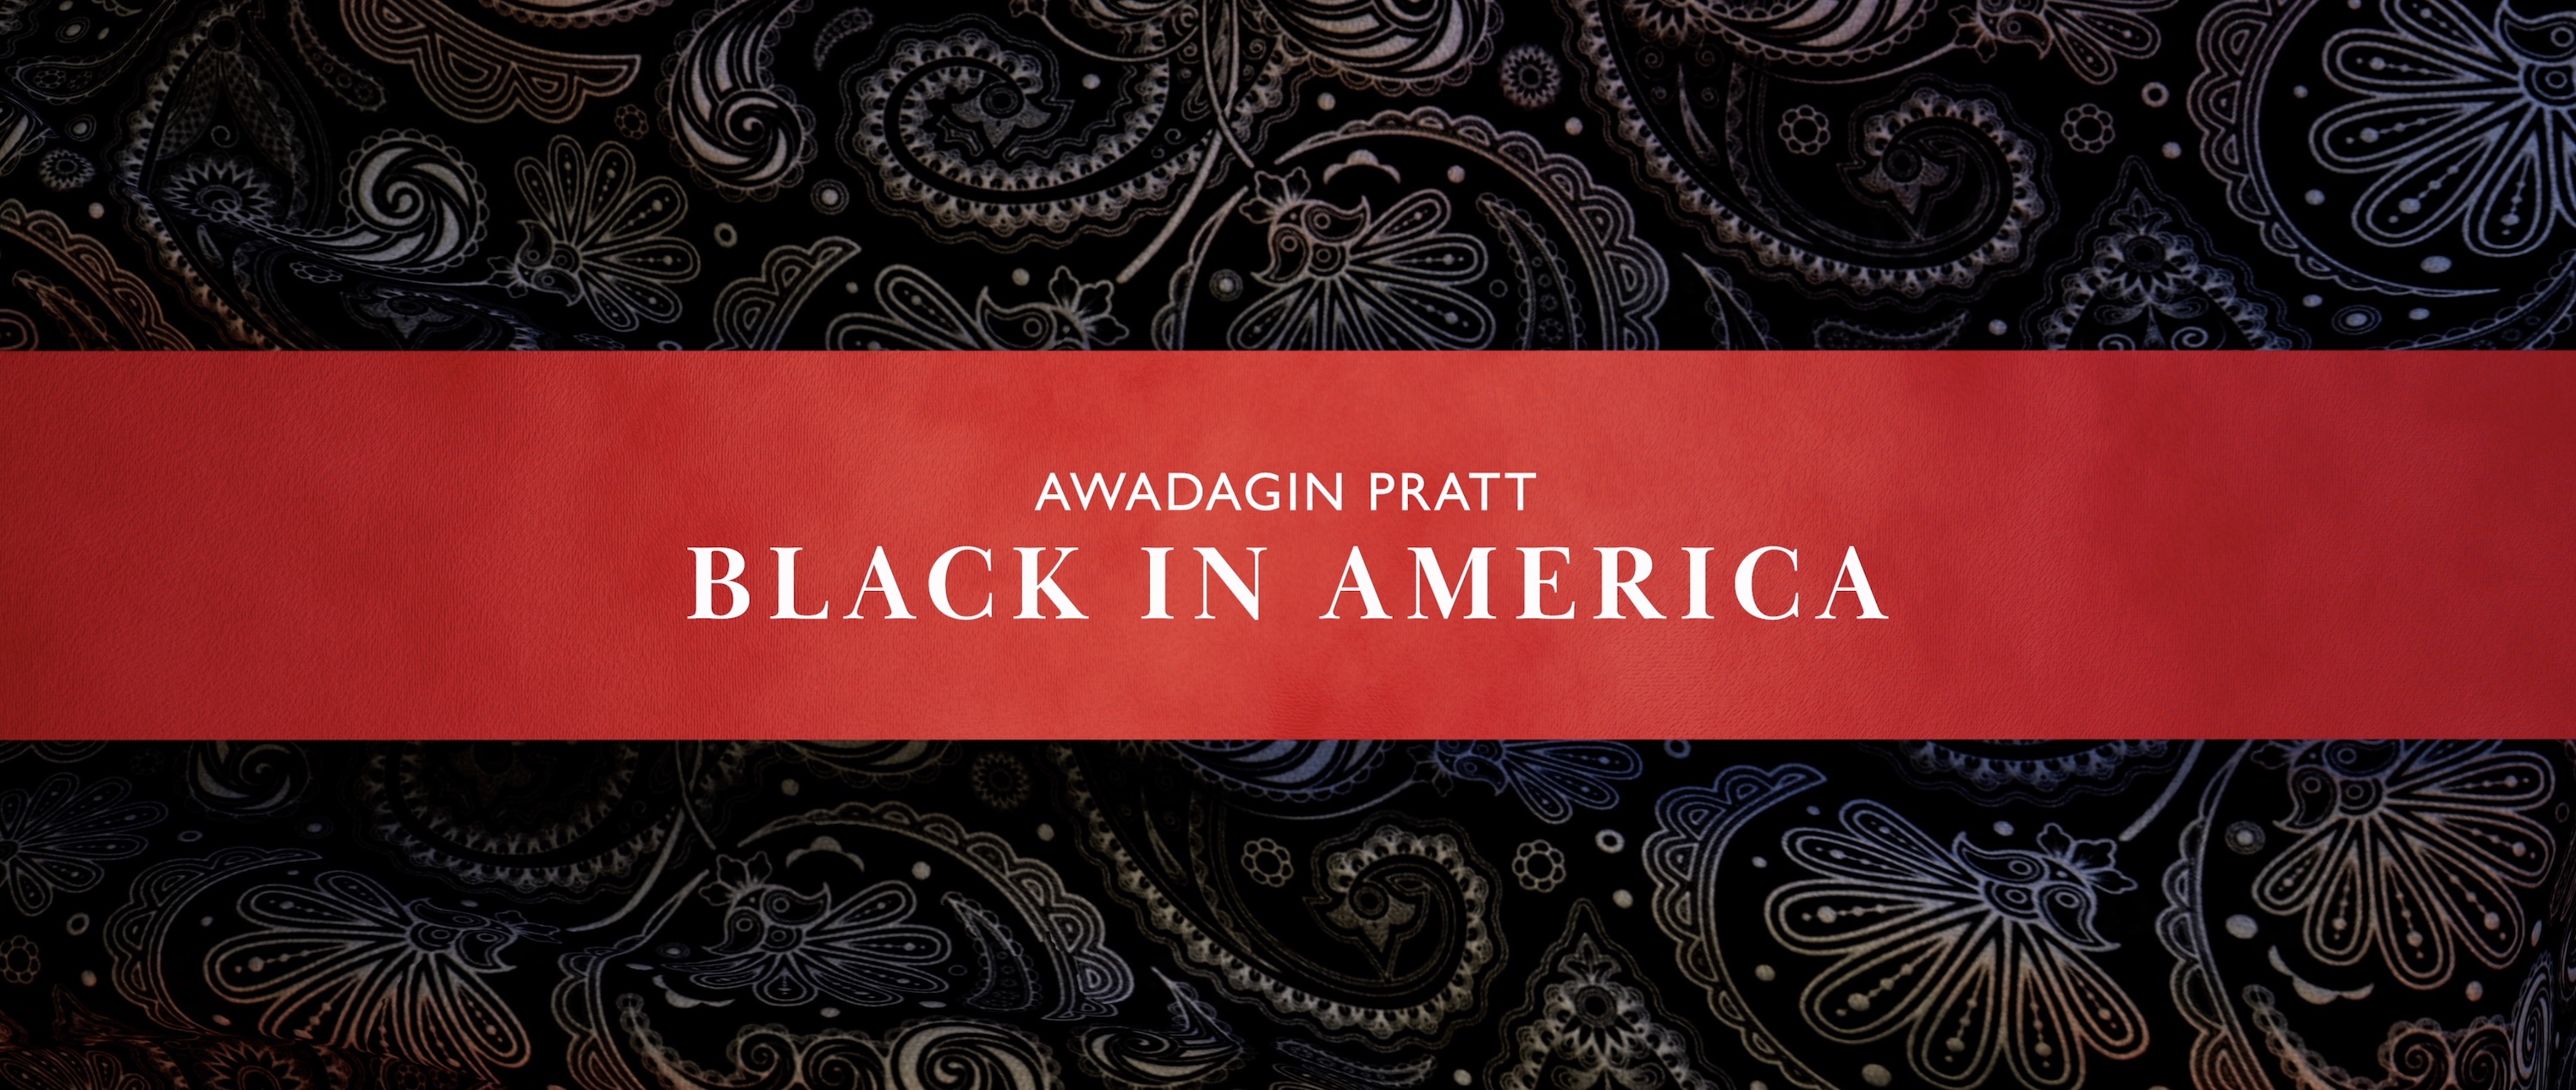 Awadagin Pratt: Black in America